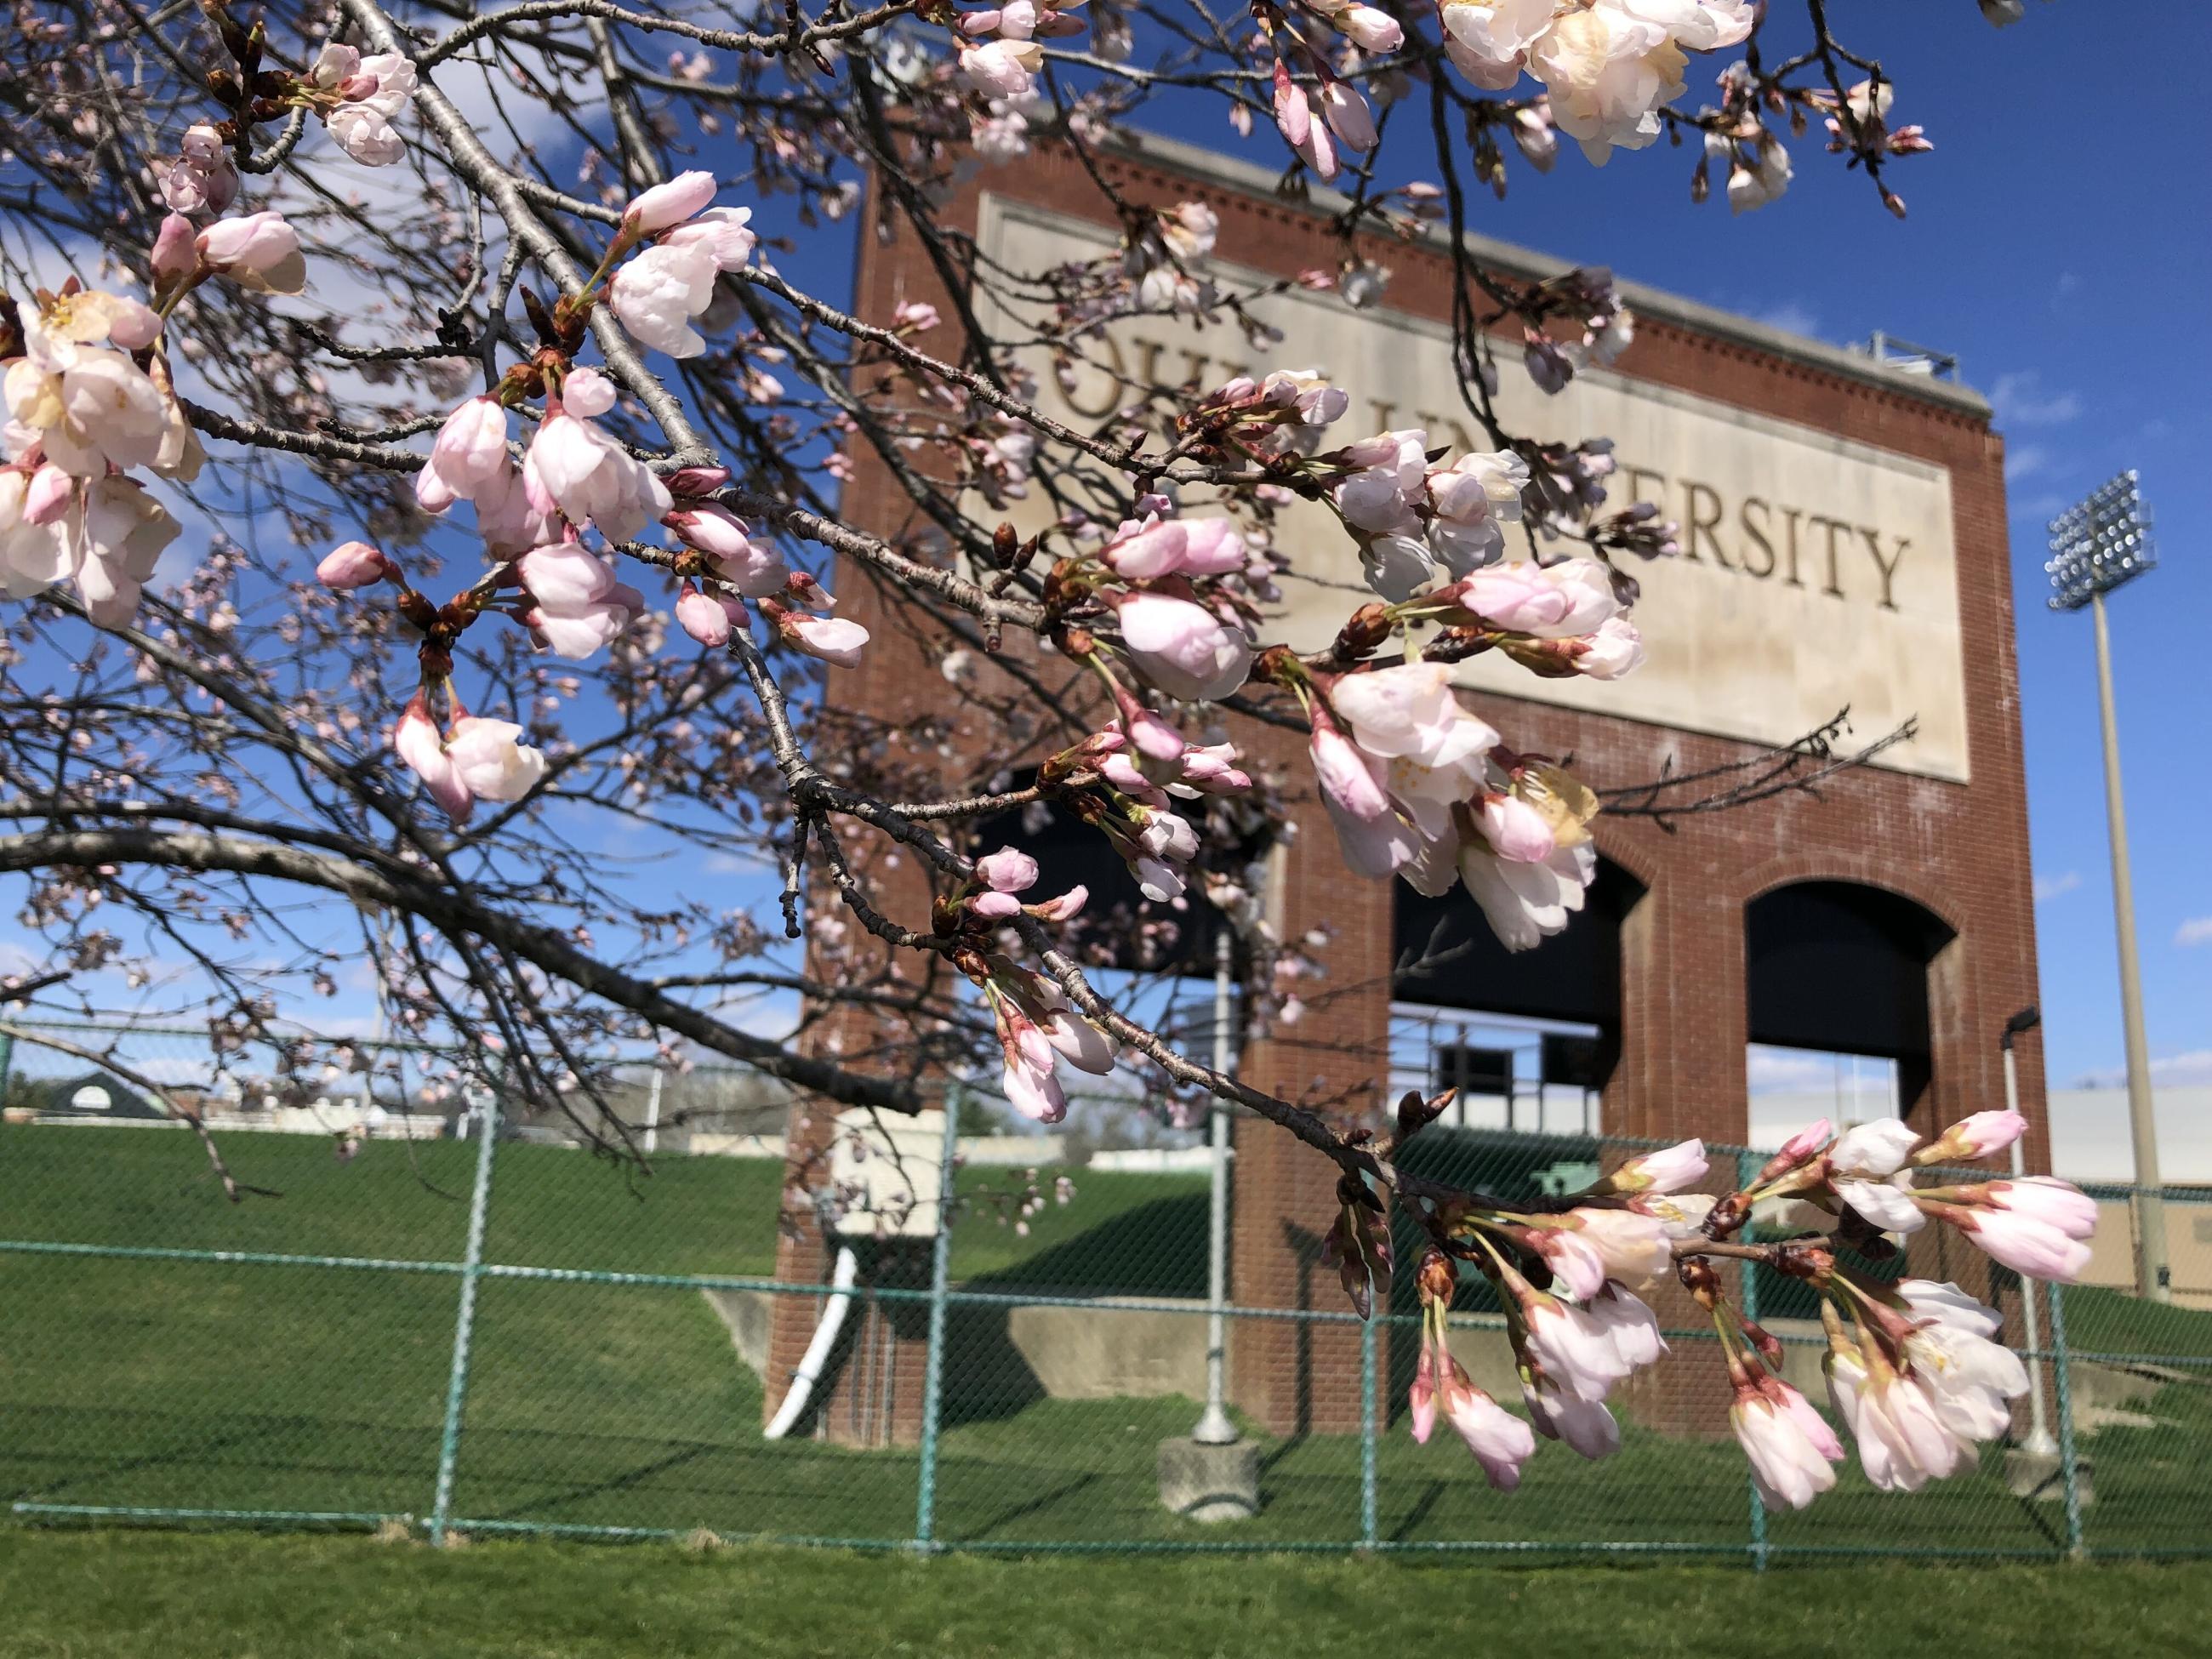 Up close cherry tree blossoms beginning to bloom by Peden Stadium